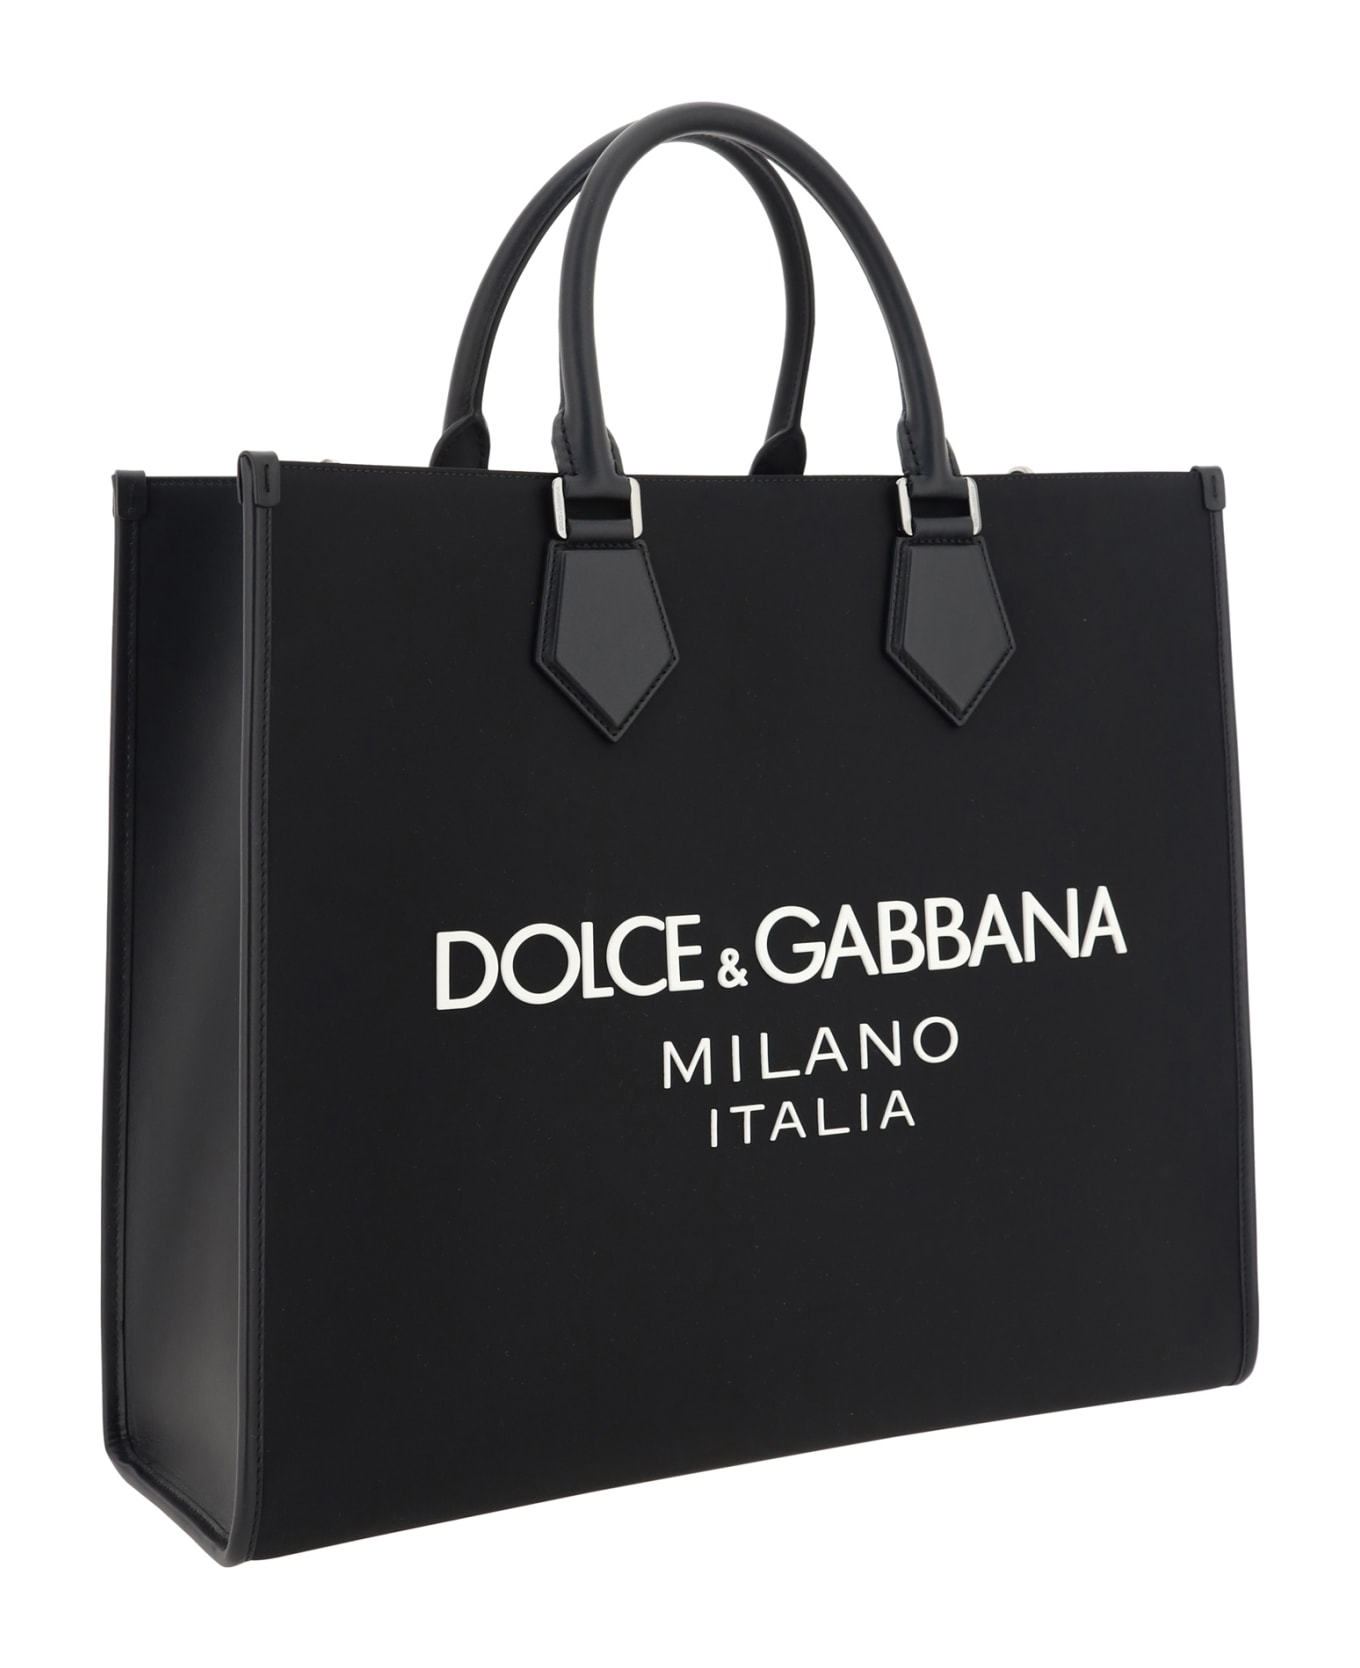 Dolce & Gabbana Tote Bag - BLACK